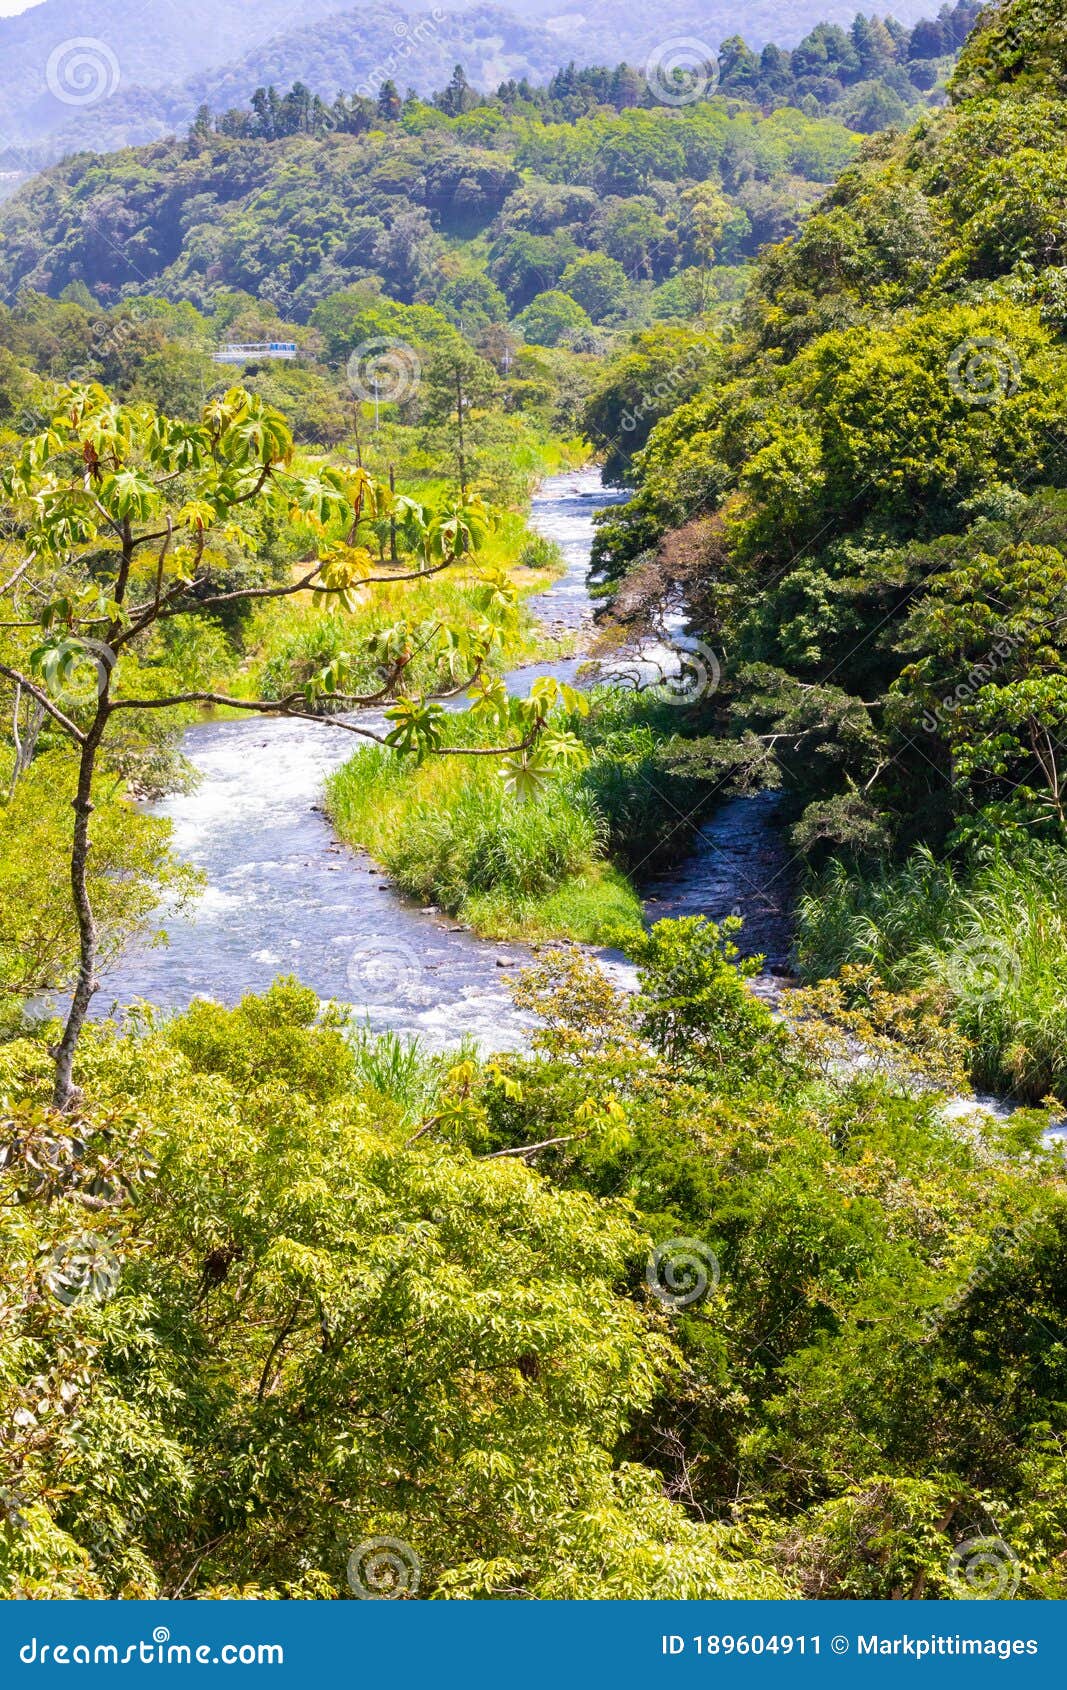 costa rica sucio river in a stretch of tropical jungle